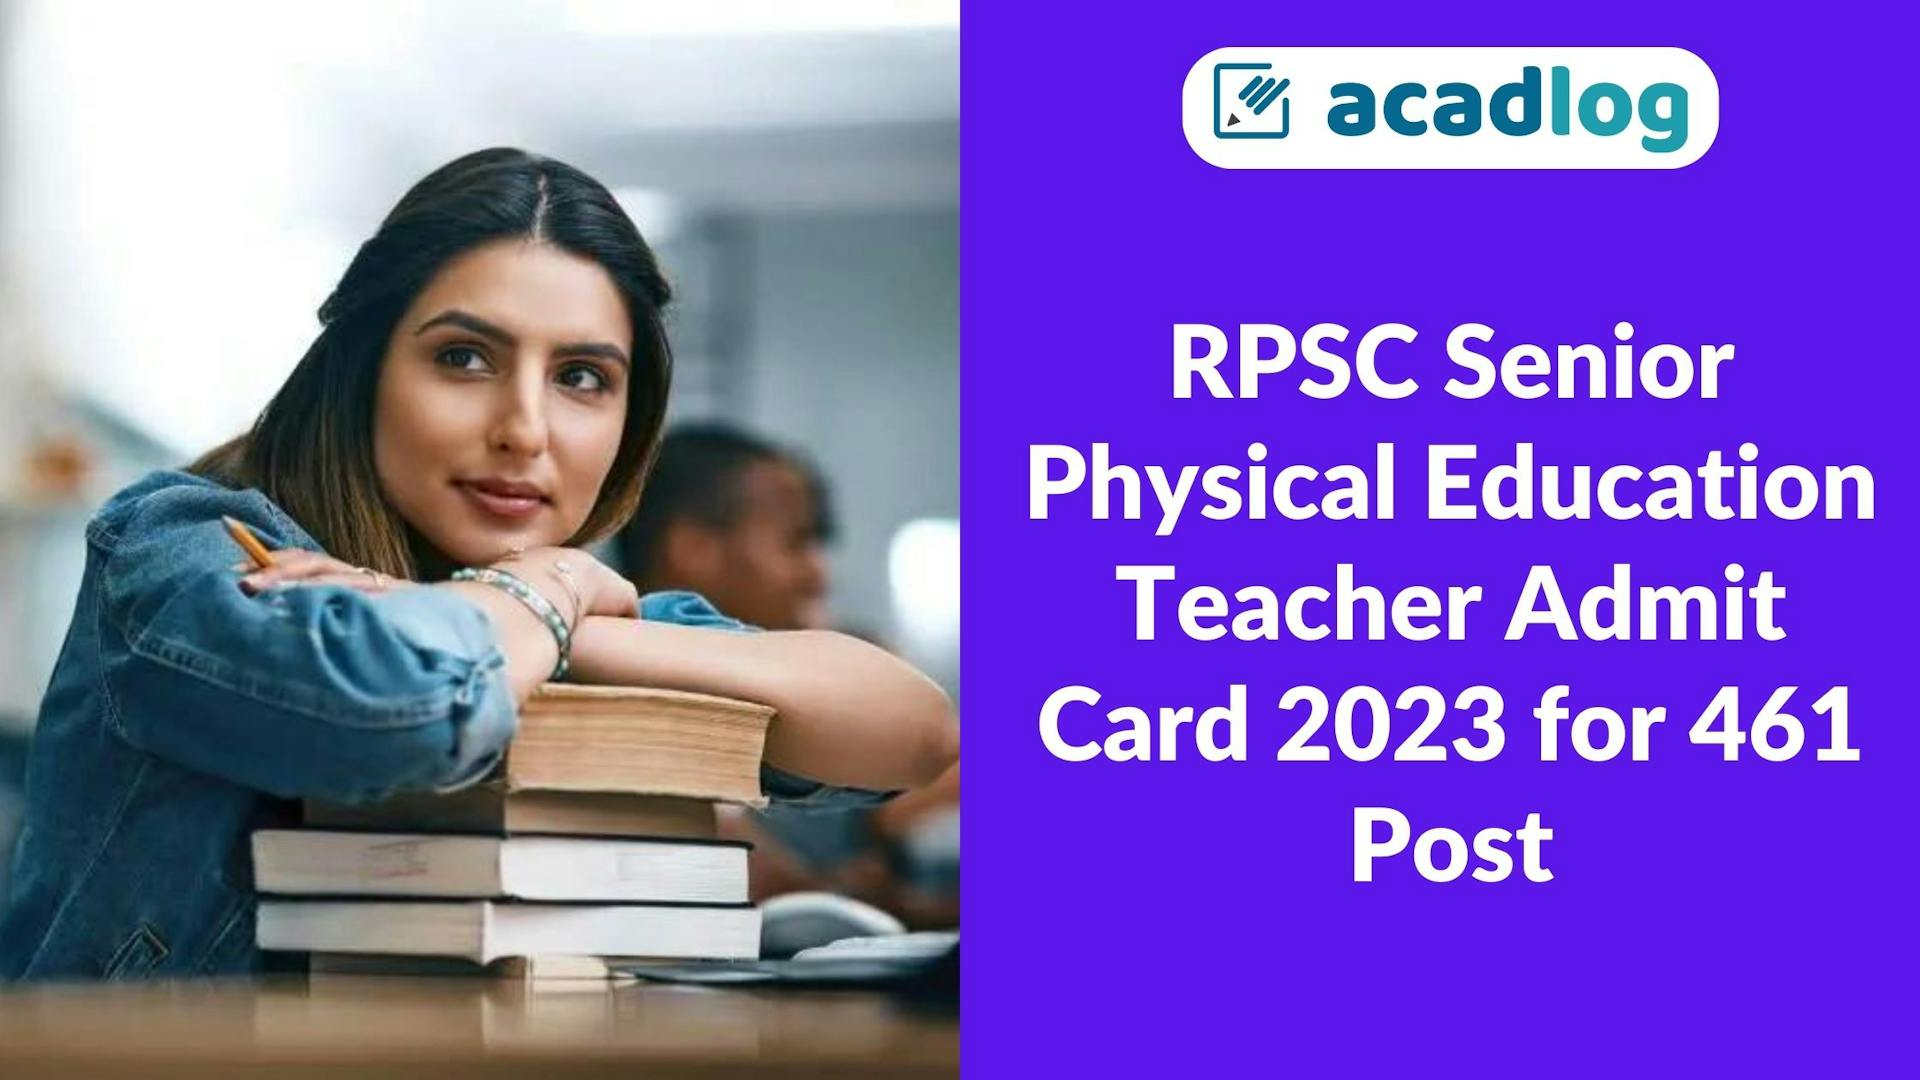 Acadlog: Rajasthan RPSC Senior Physical Education Teacher 08/2022 Recruitment 2022 Admit Card / Exam City Details